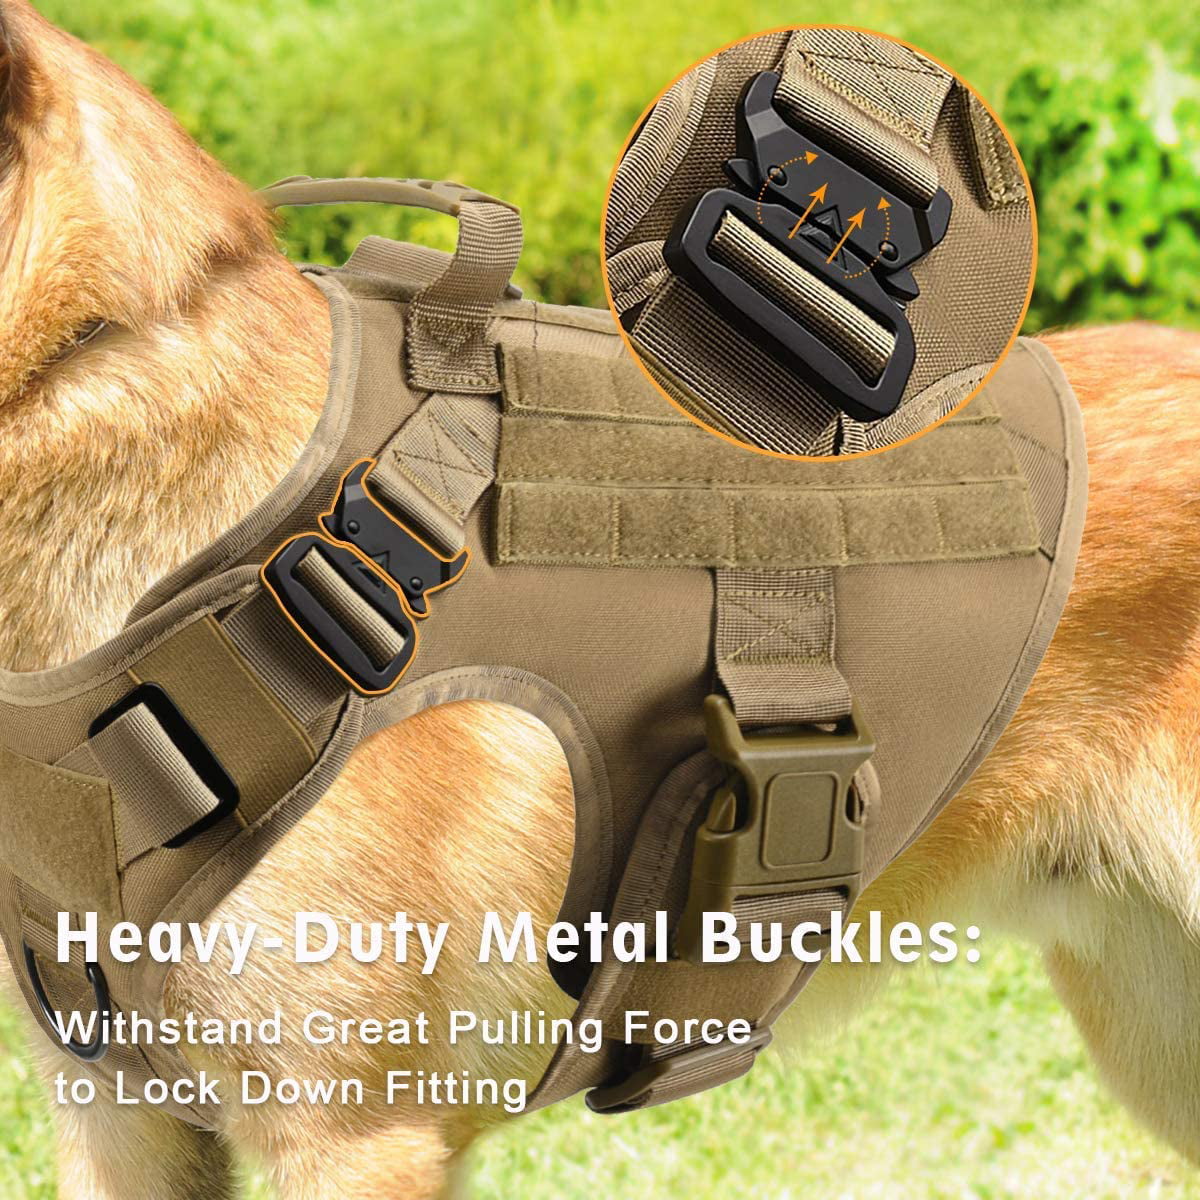 Wholesale TUFFHOUND dog harness Vest Set luxury dog harness I-shaped pet  chest and back From m.